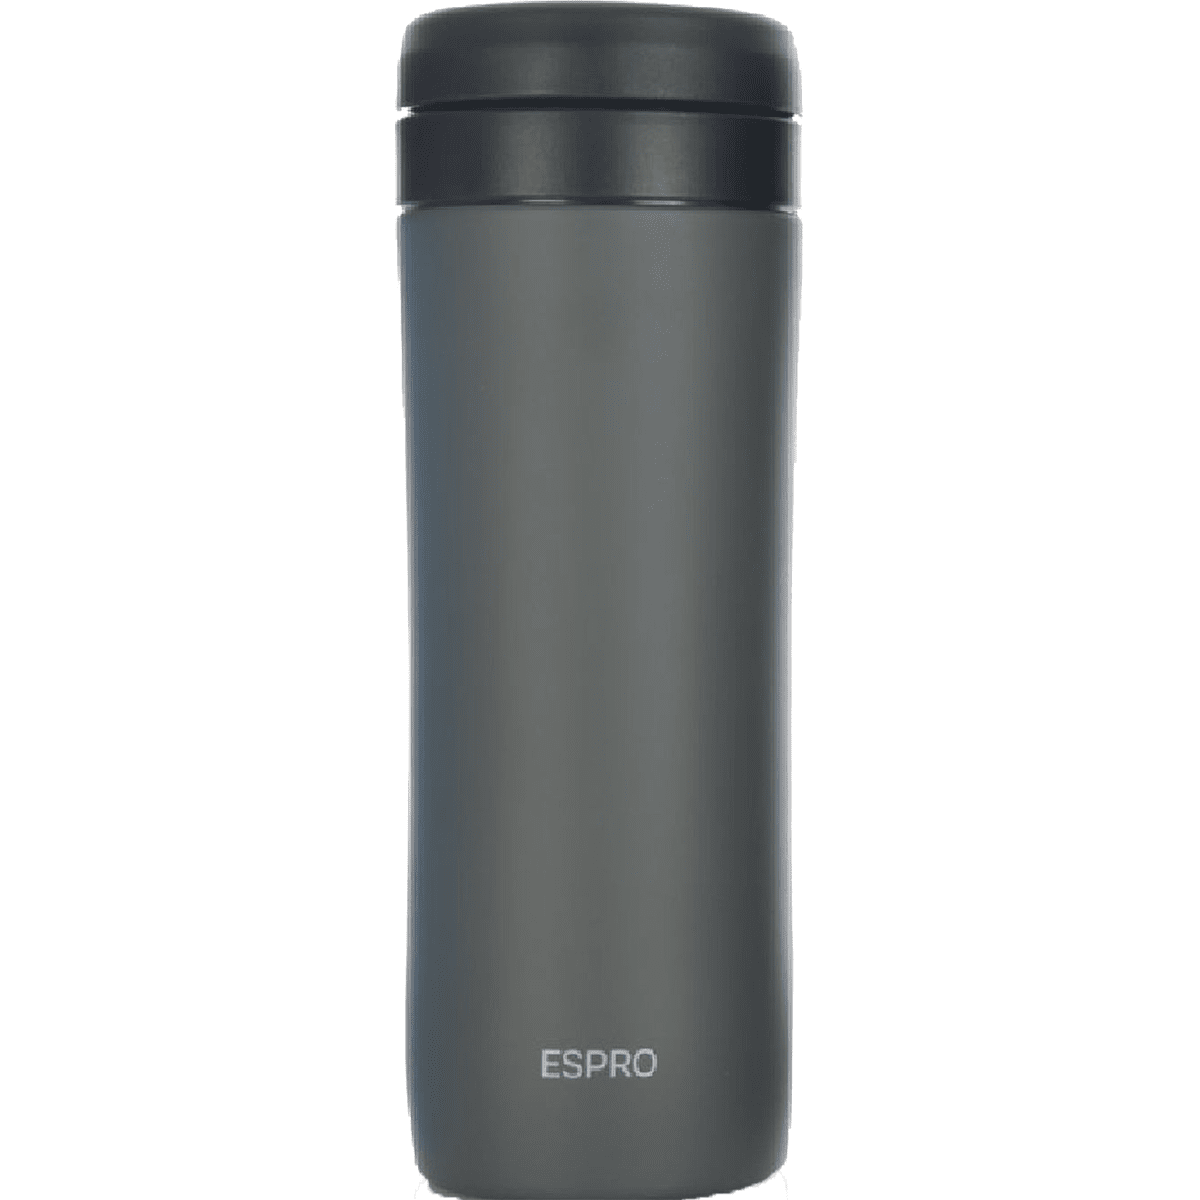 Espro Travel Press for Coffee - 12 oz Gunmetal Grey